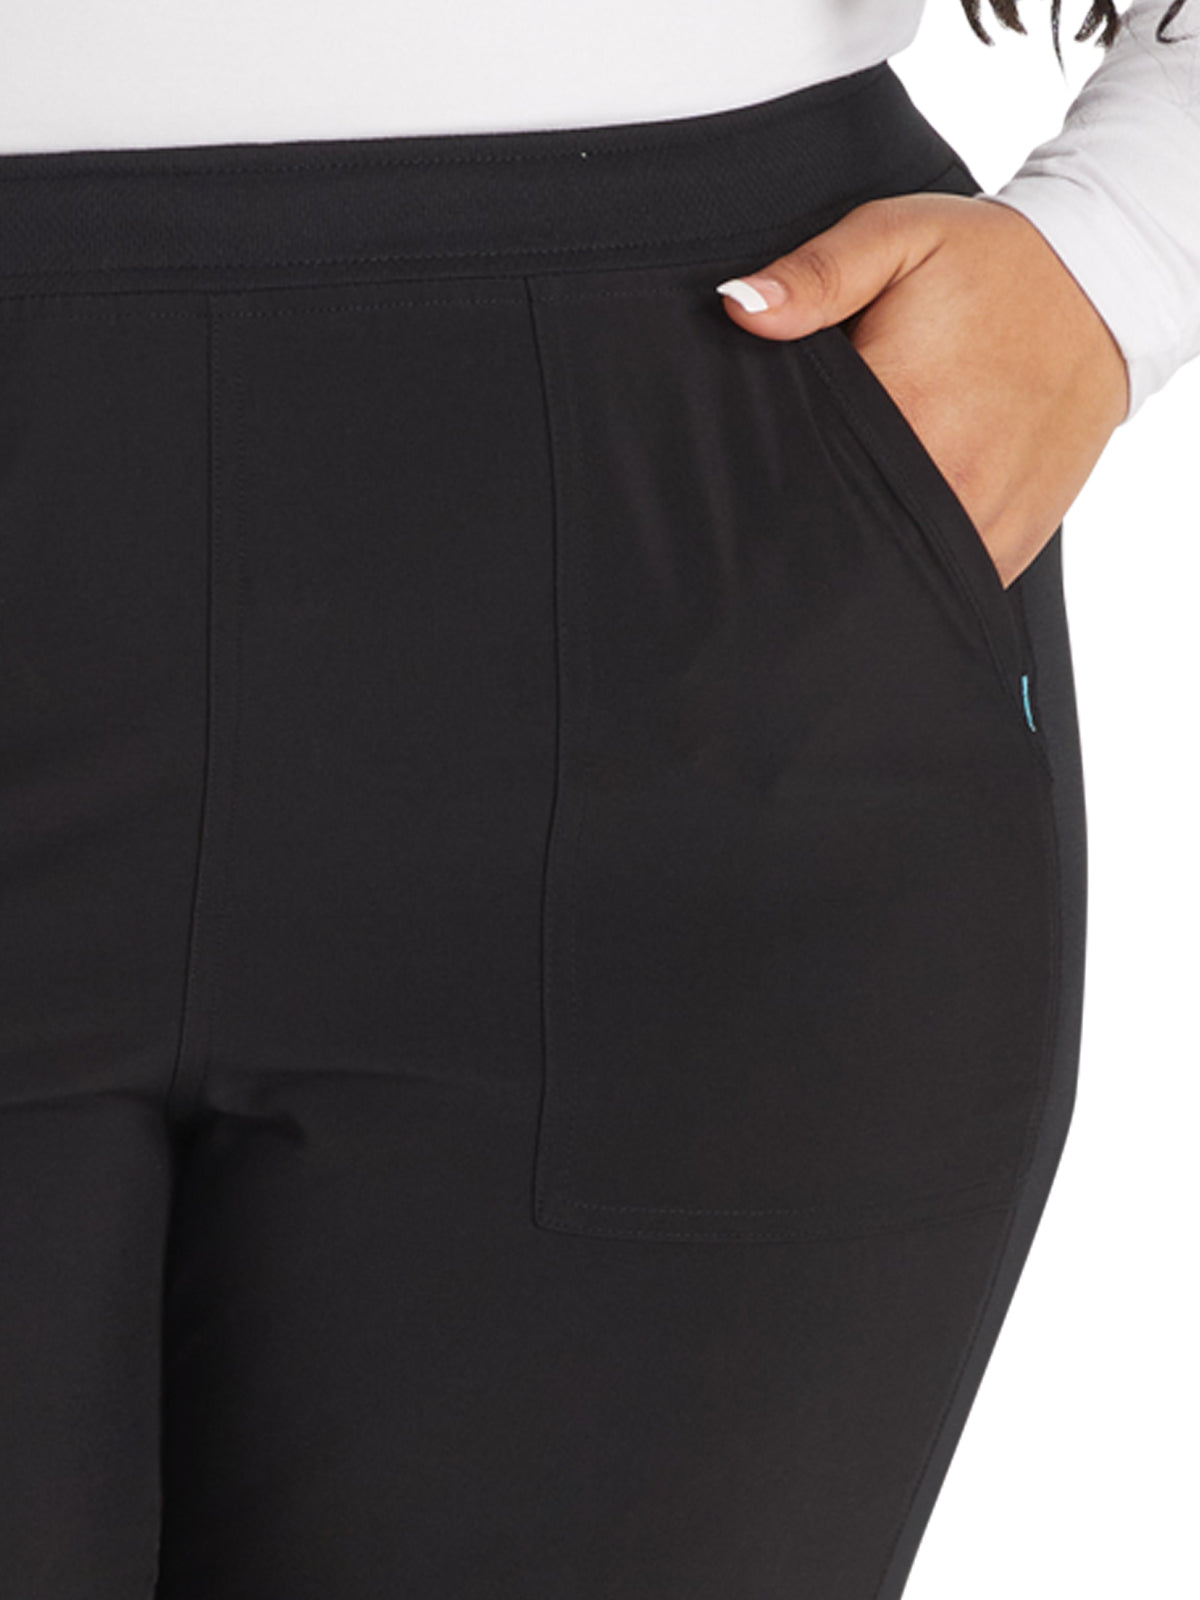 Women's 5-Pocket Tapered Leg Scrub Pant